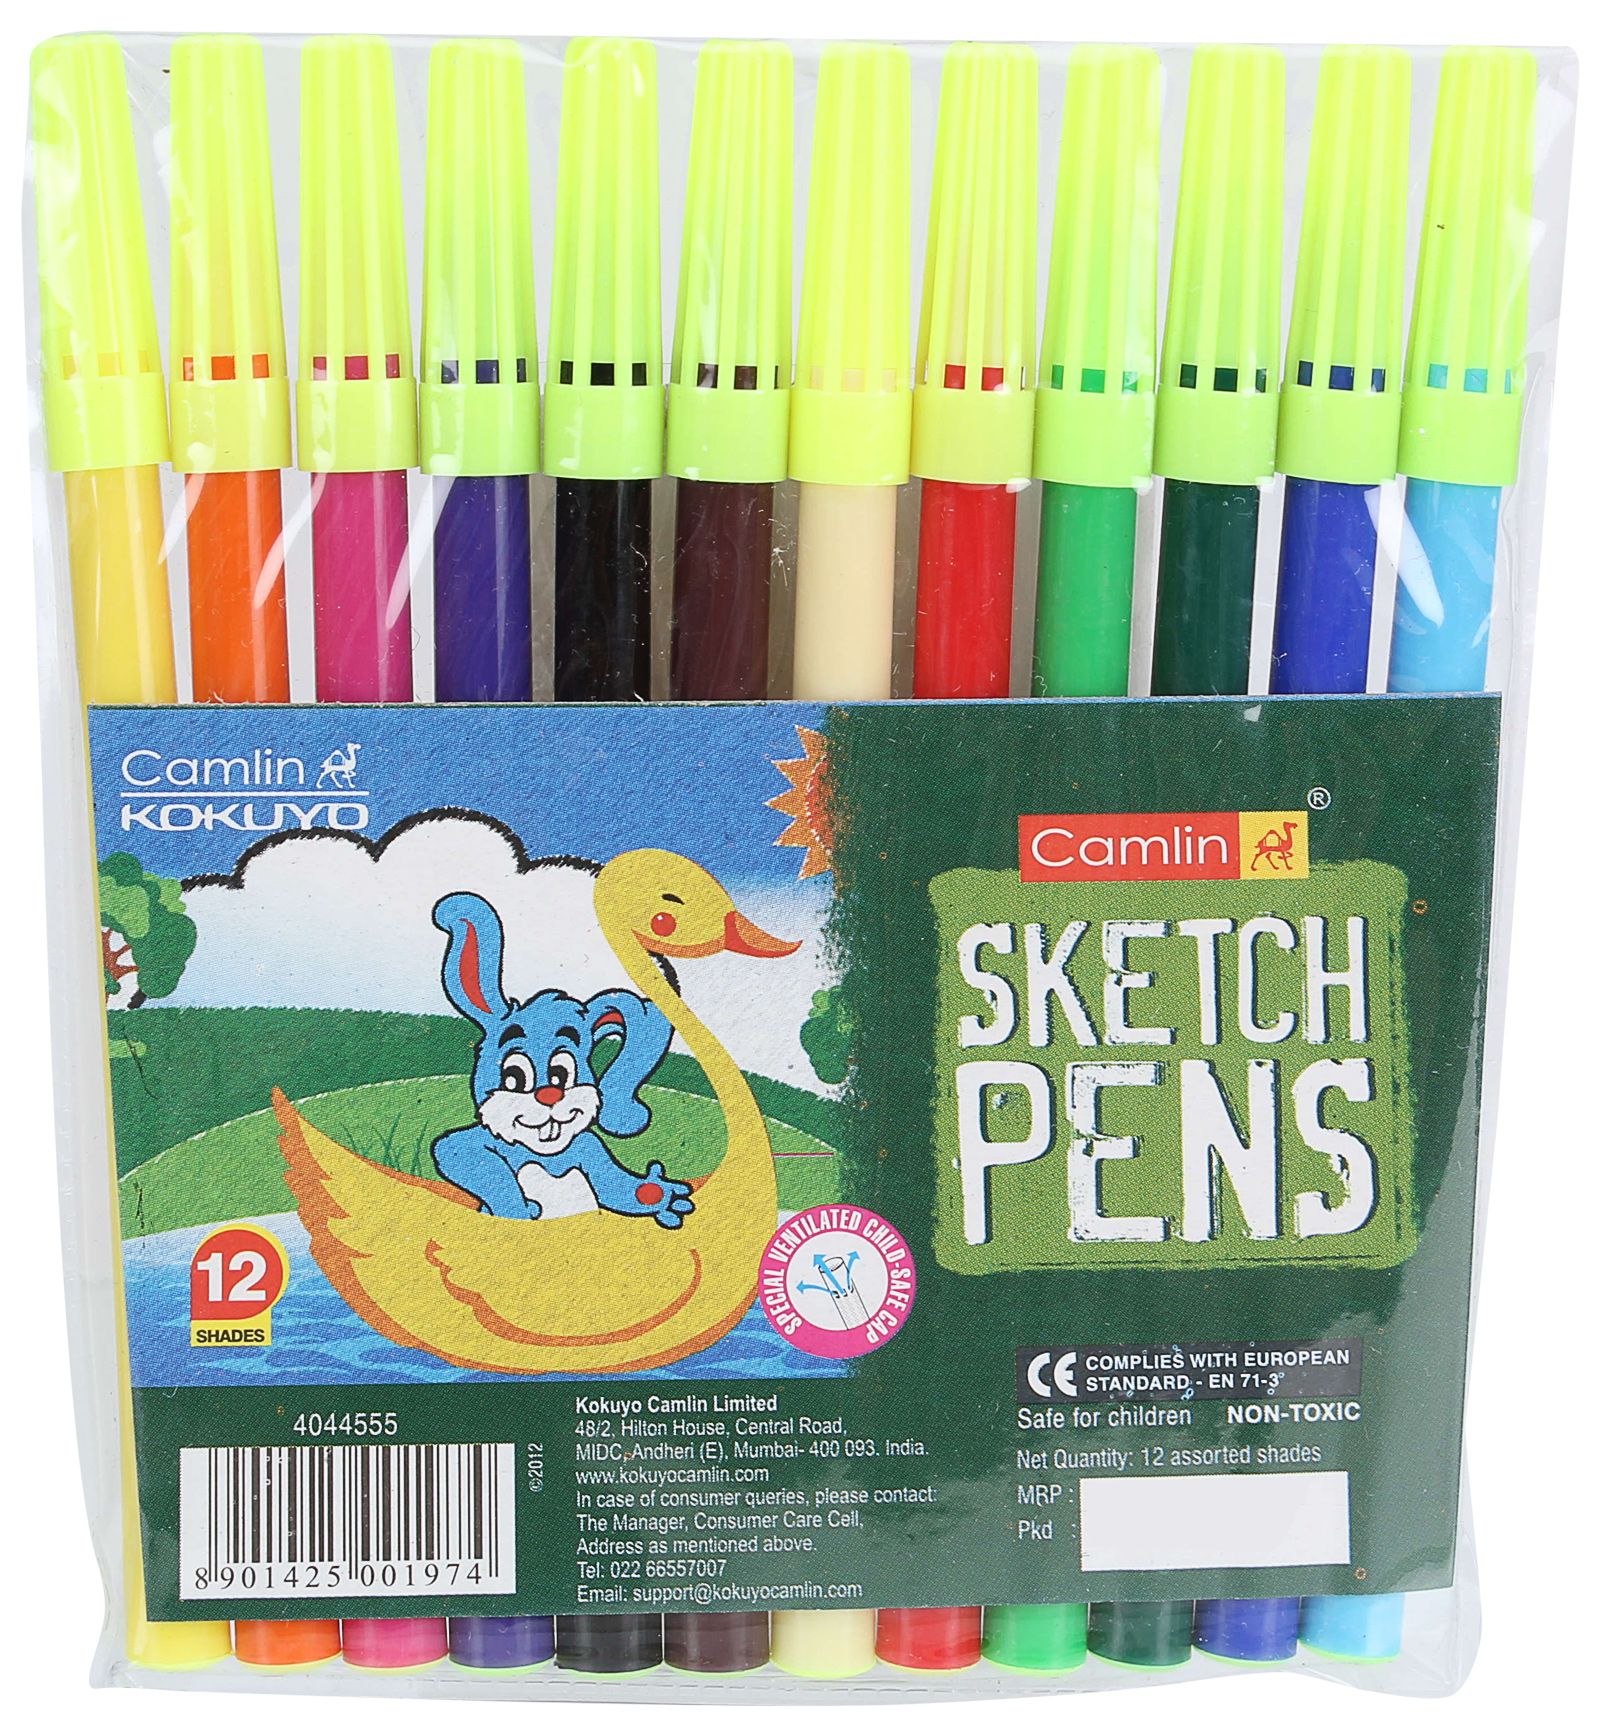 Camlin Sketch Pens 12 shades